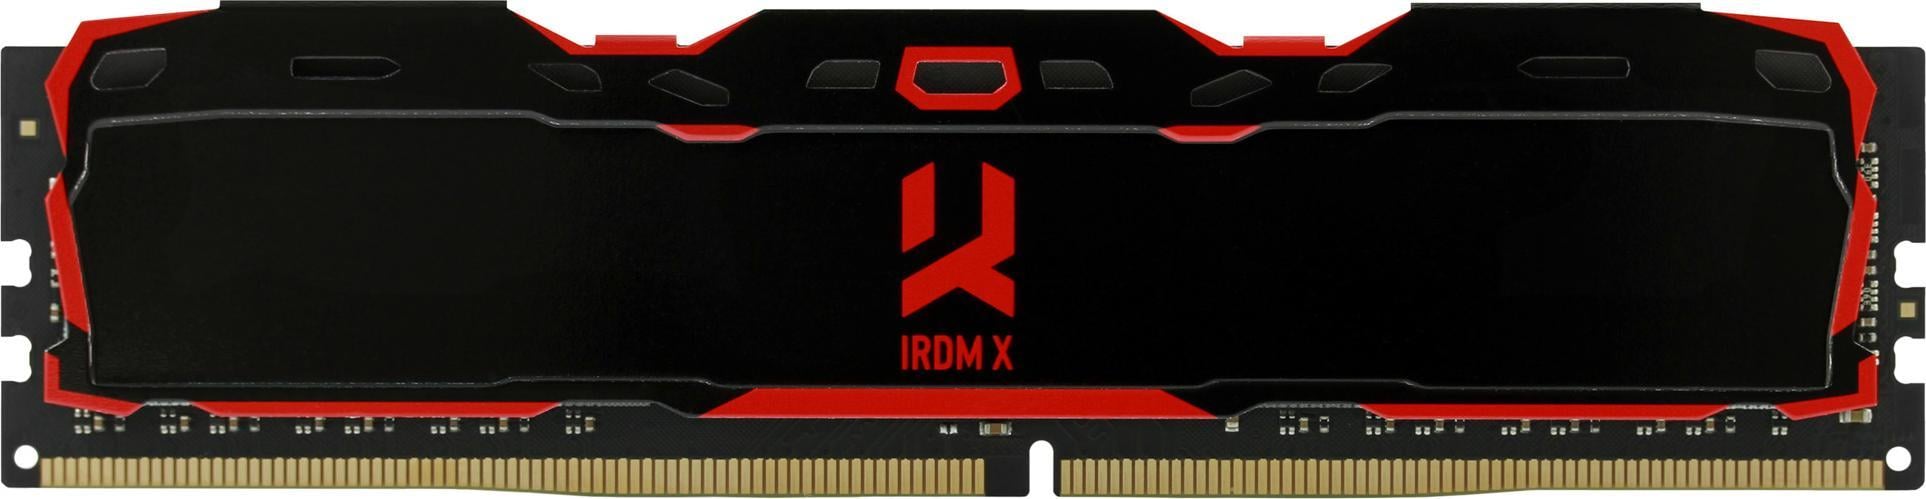 Memorie RAM Goodram IRDM X Black, 8GB, DDR4, 2666MHz, CL16